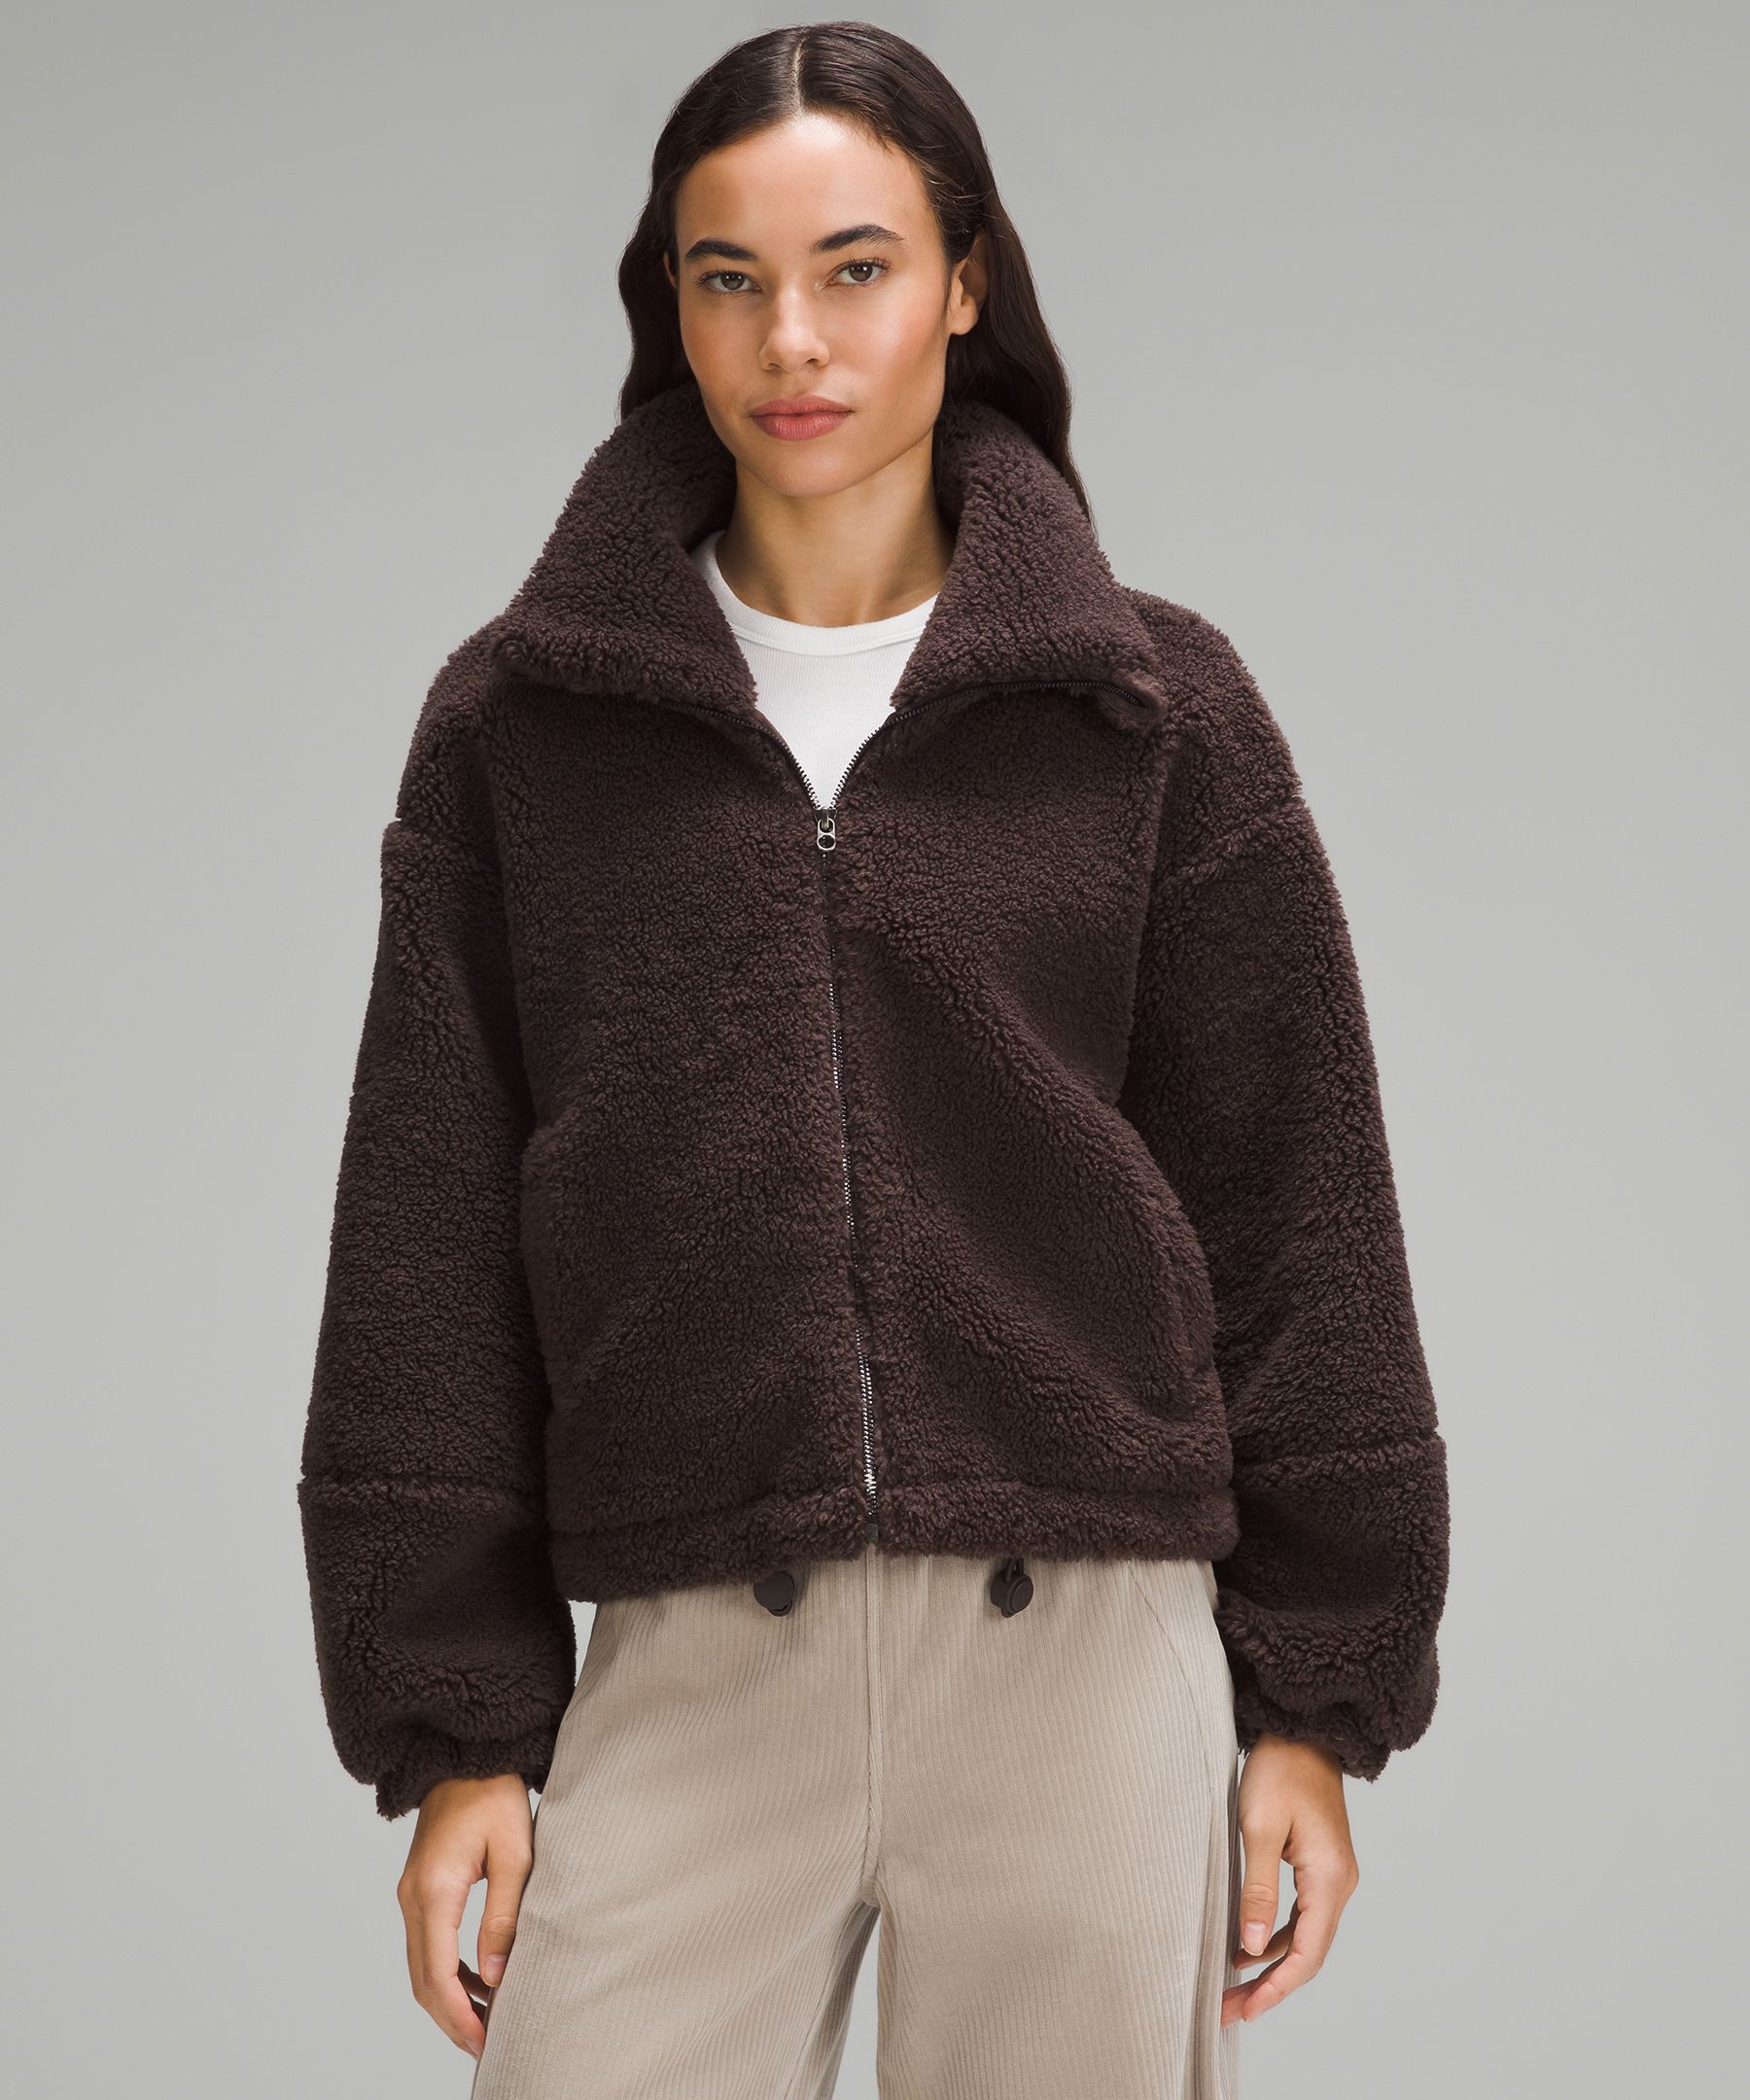 Fit Review! Vuori Cozy Sherpa Jacket vs Lululemon Cinchable Fleece Zip-Up